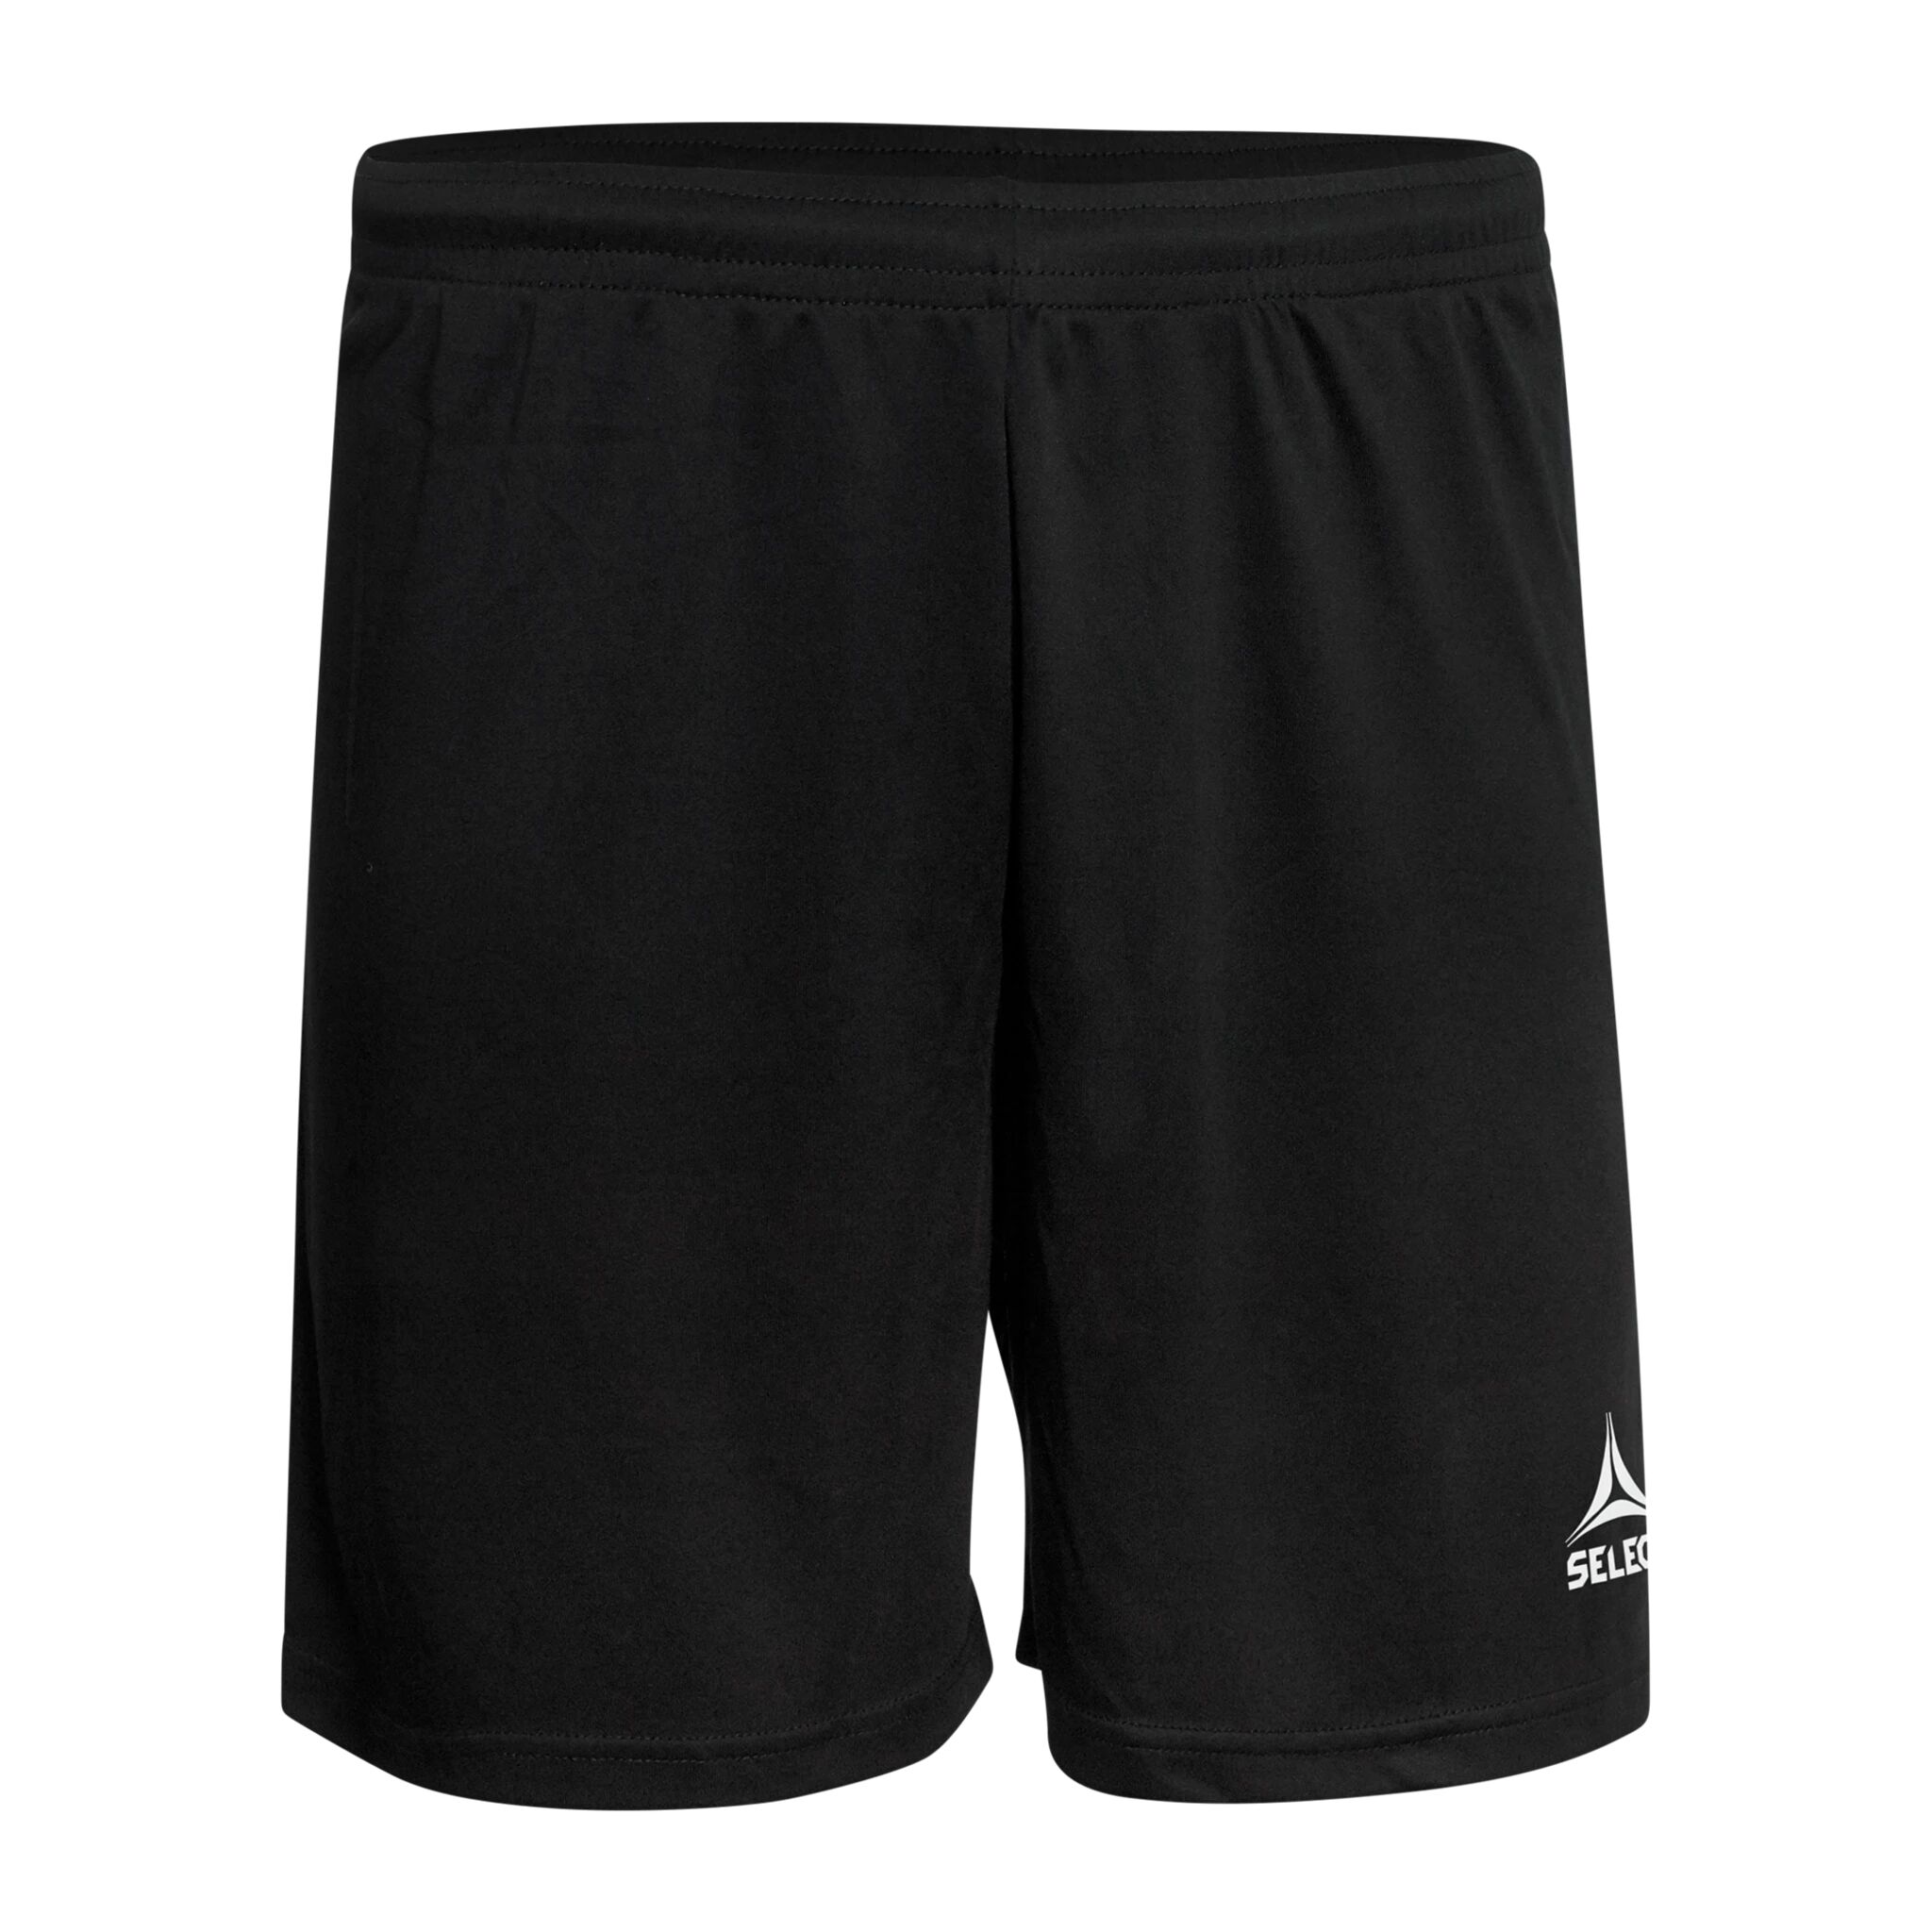 Select Player shorts Pisa, shorts senior XXXL BLACK